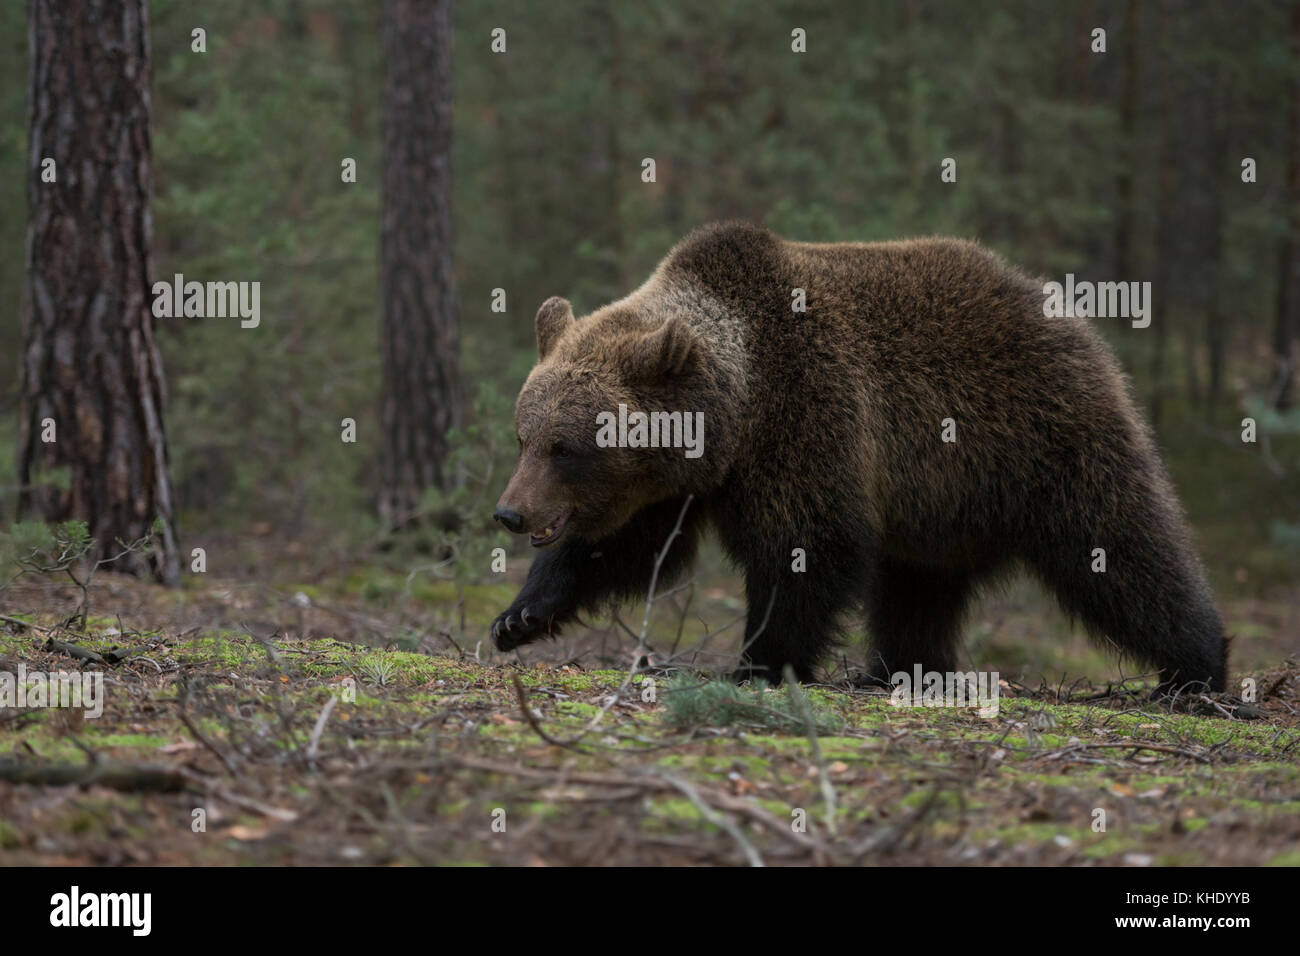 Orso bruno Eurasian / Braunbaer ( Ursus arctos ), giovane adolescente, a piedi attraverso una foresta, nel suo ambiente naturale, vista laterale, Europa. Foto Stock